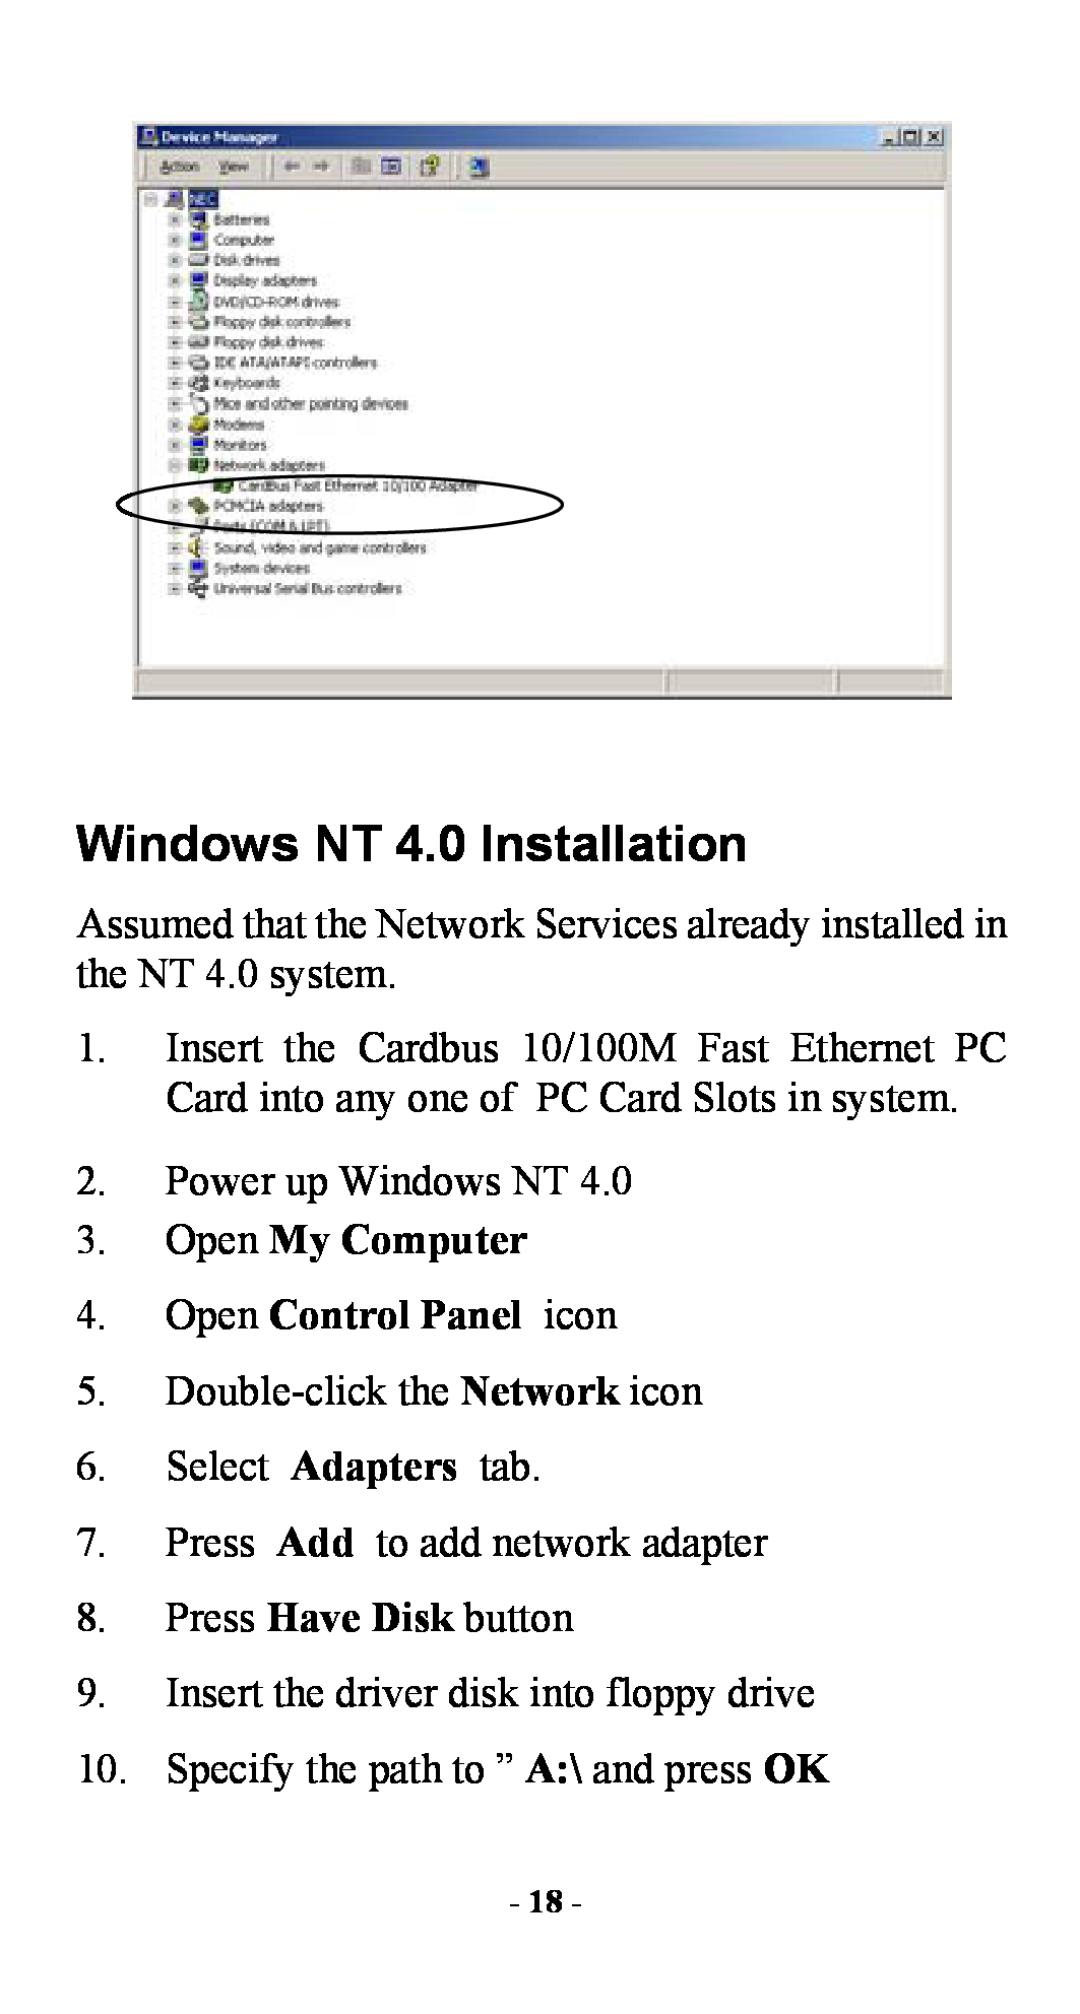 Abocom FE2000 manual Windows NT 4.0 Installation, Open My Computer 4. Open Control Panel icon 